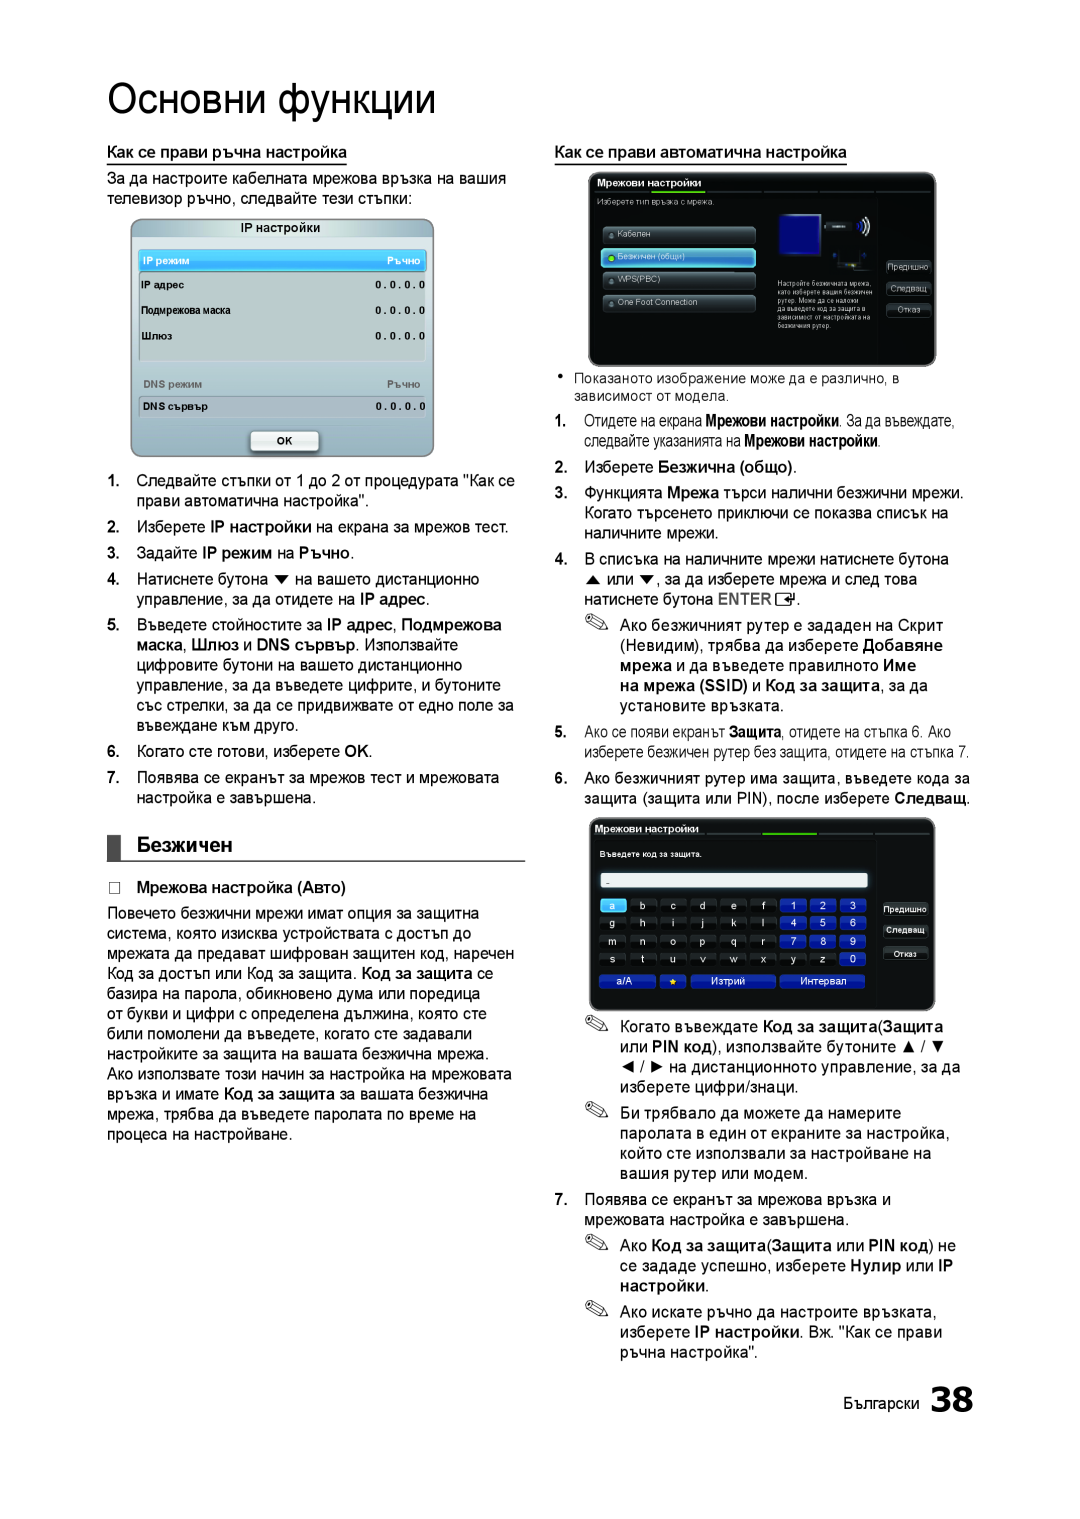 Samsung LT27A950EX/EN manual Безжичен, Основни функции, Как се прави ръчна настройка, Как се прави автоматична настройка 